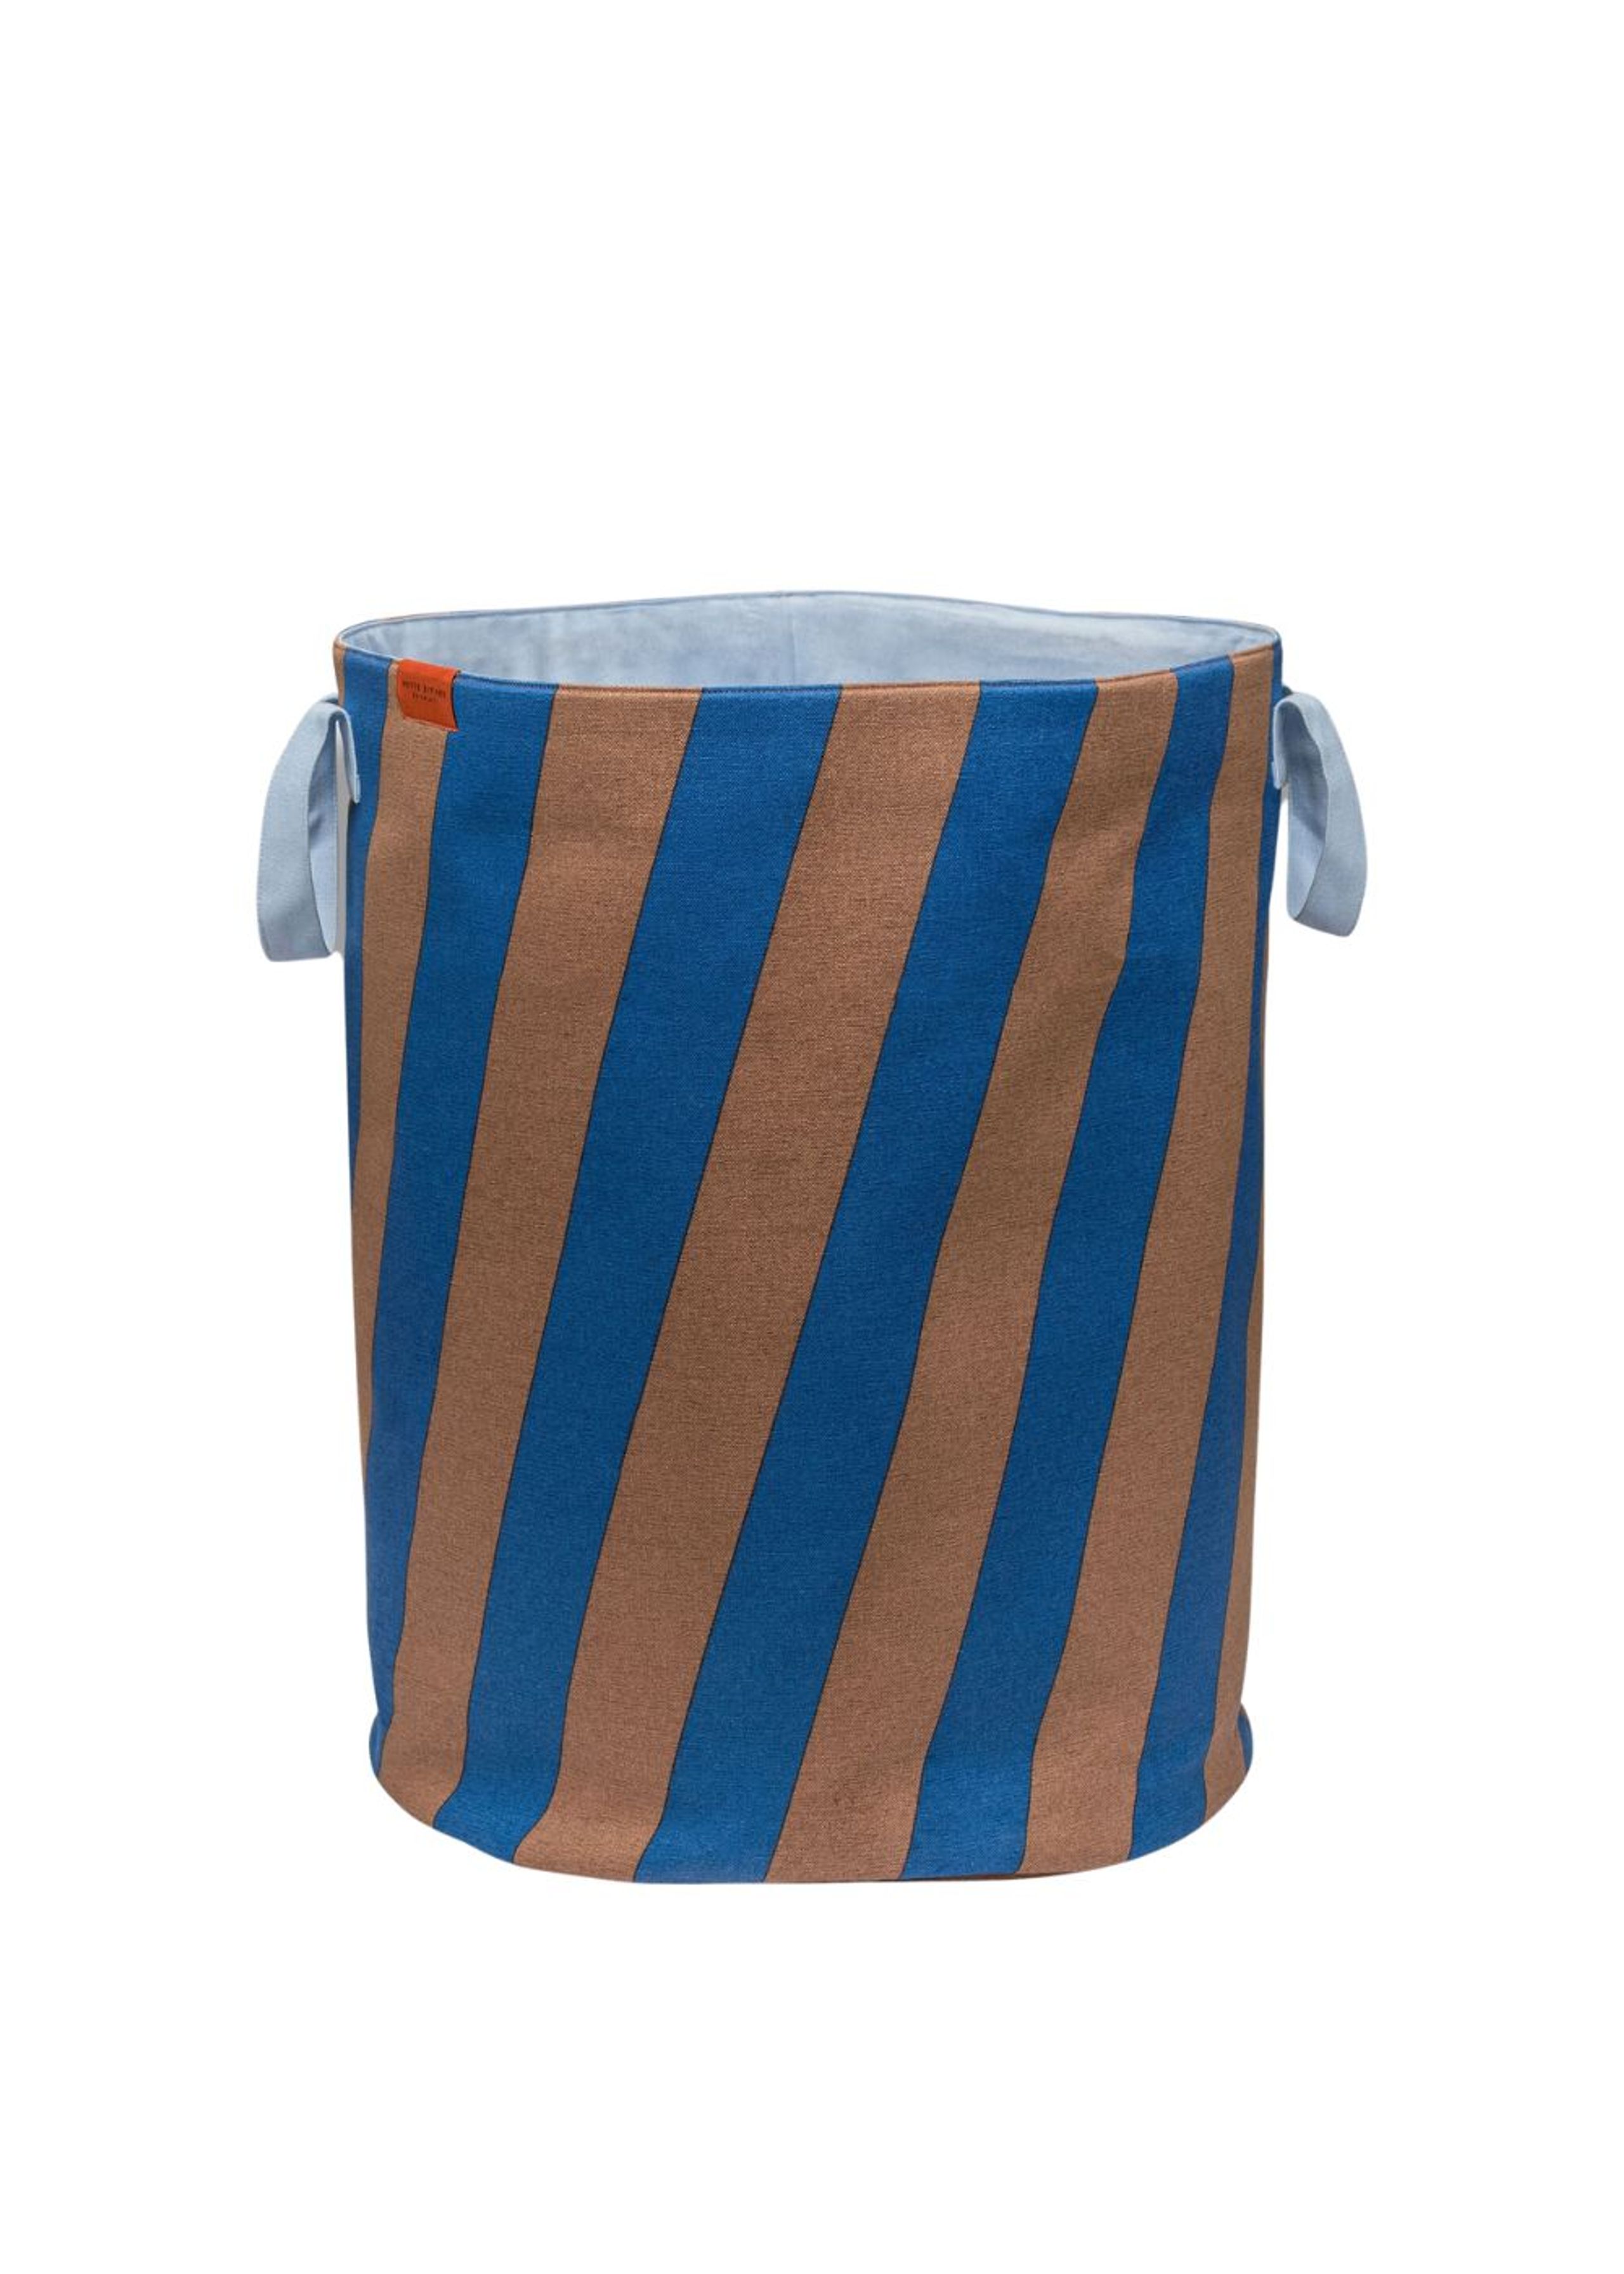 Mette Ditmer - Cesto da roupa - NOVA ARTE Laundry Bag  - Cobalt / Blush